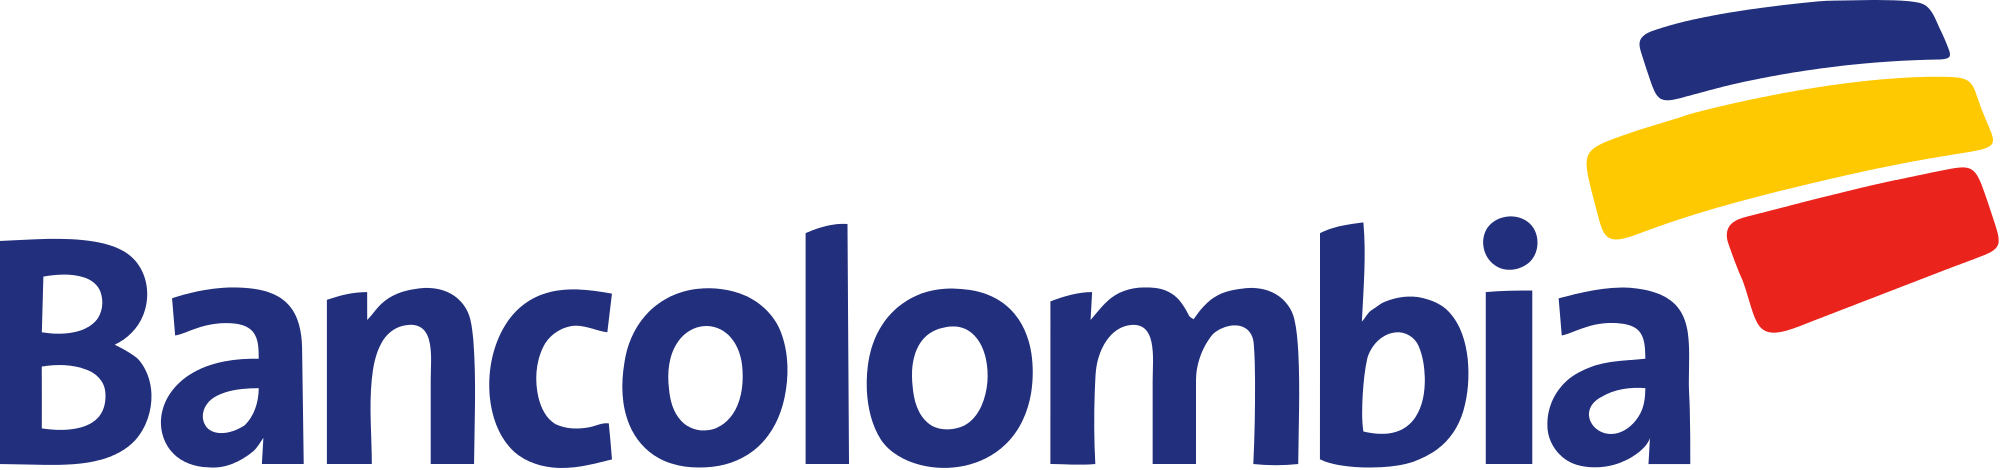 Bancolombia Logo photo - 1